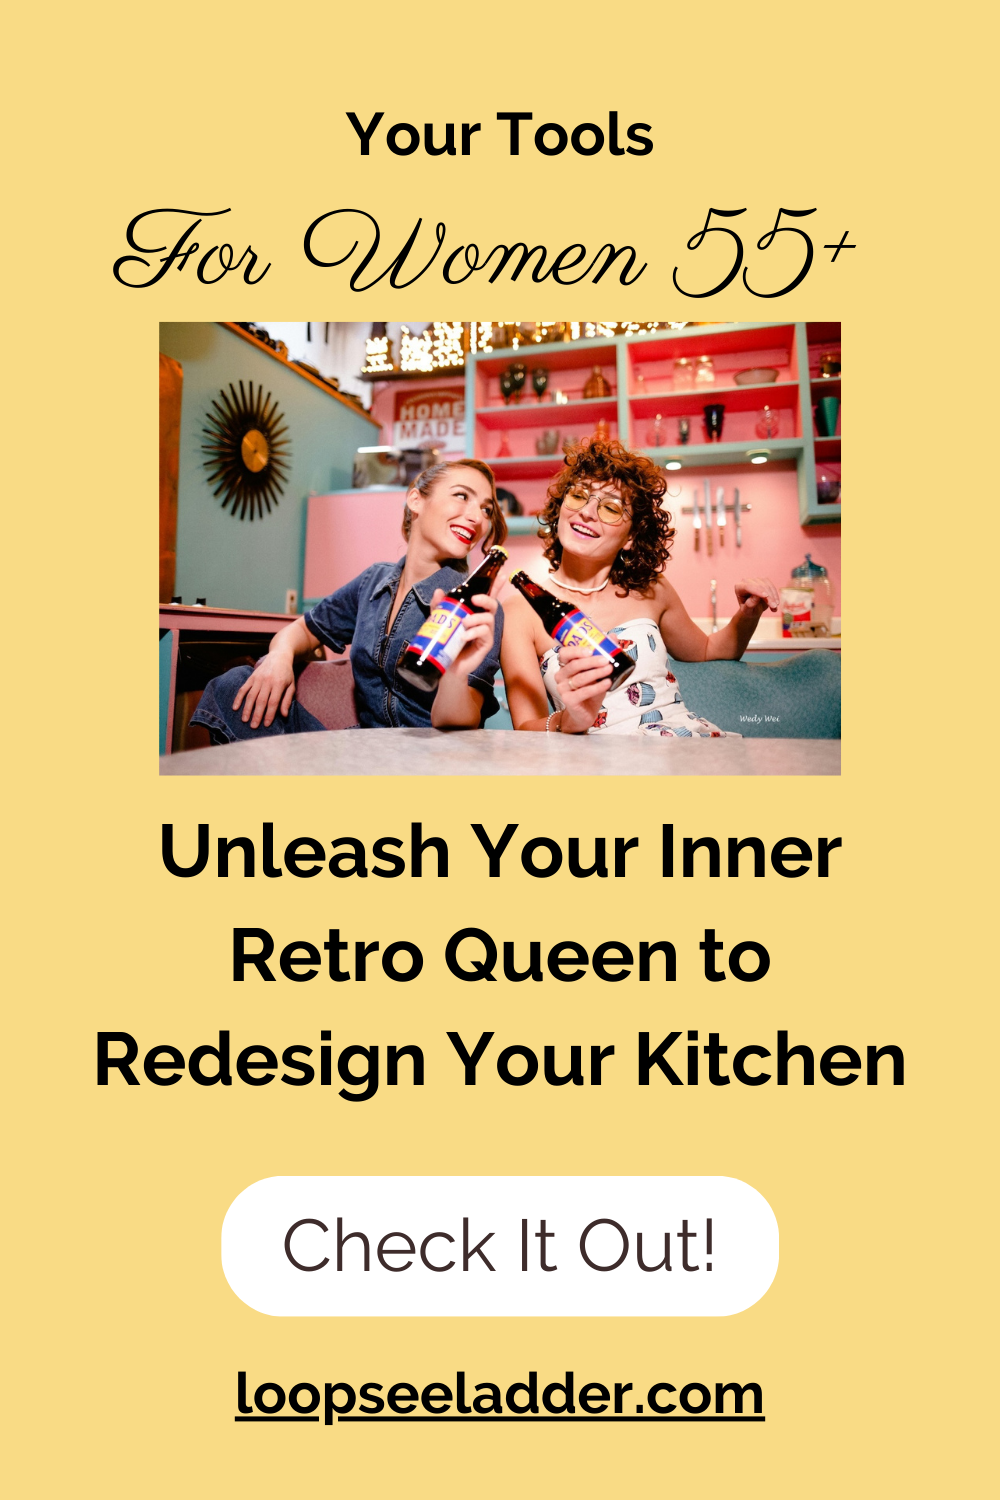 Unleash Your Inner Retro Queen: 5 Fun Ideas to Redesign Your Kitchen!